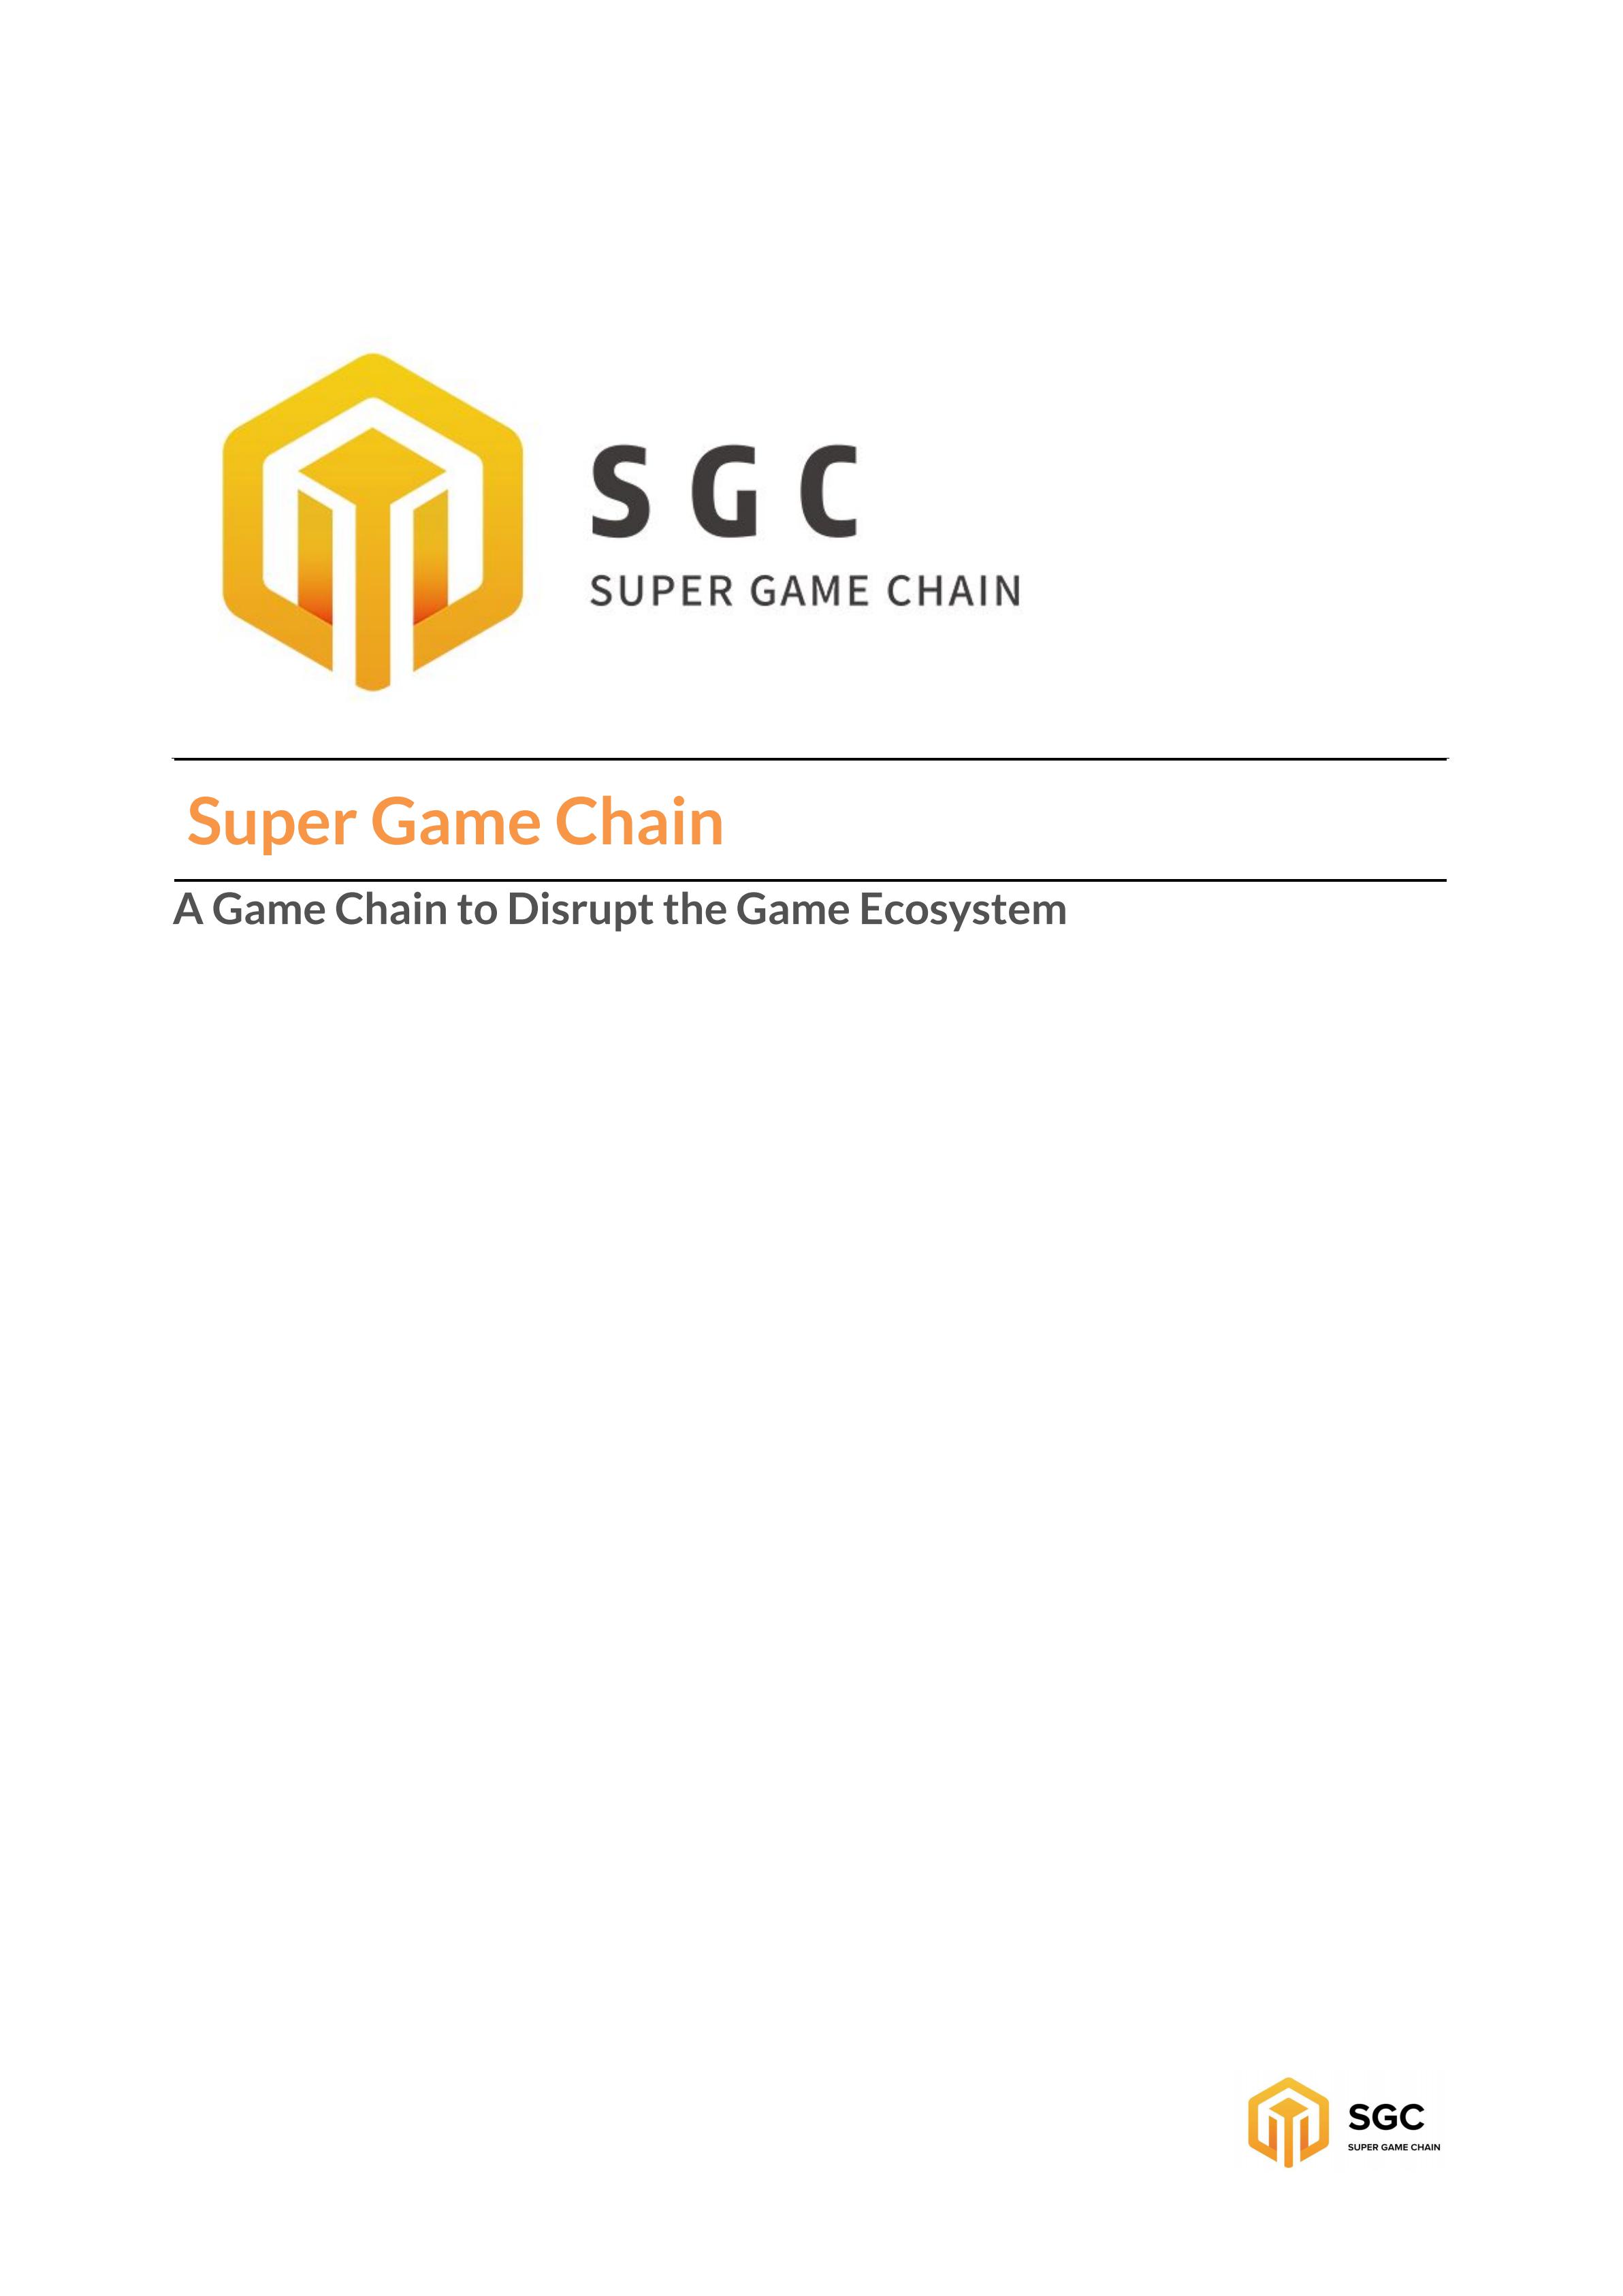 SGCC_SGCWhitePaper_00.jpg